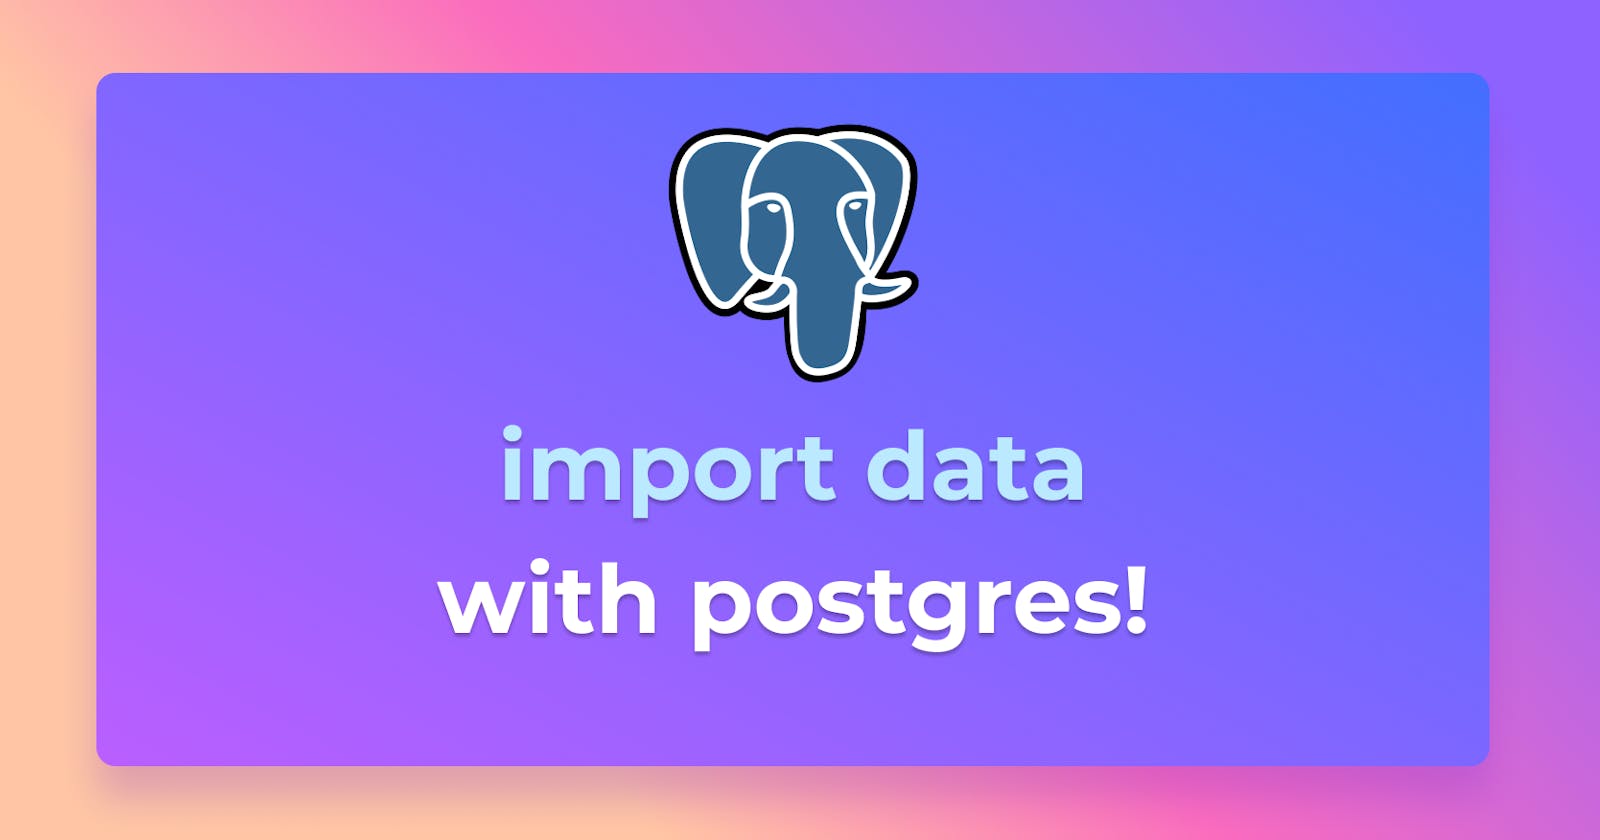 Three ways to import data into Postgres